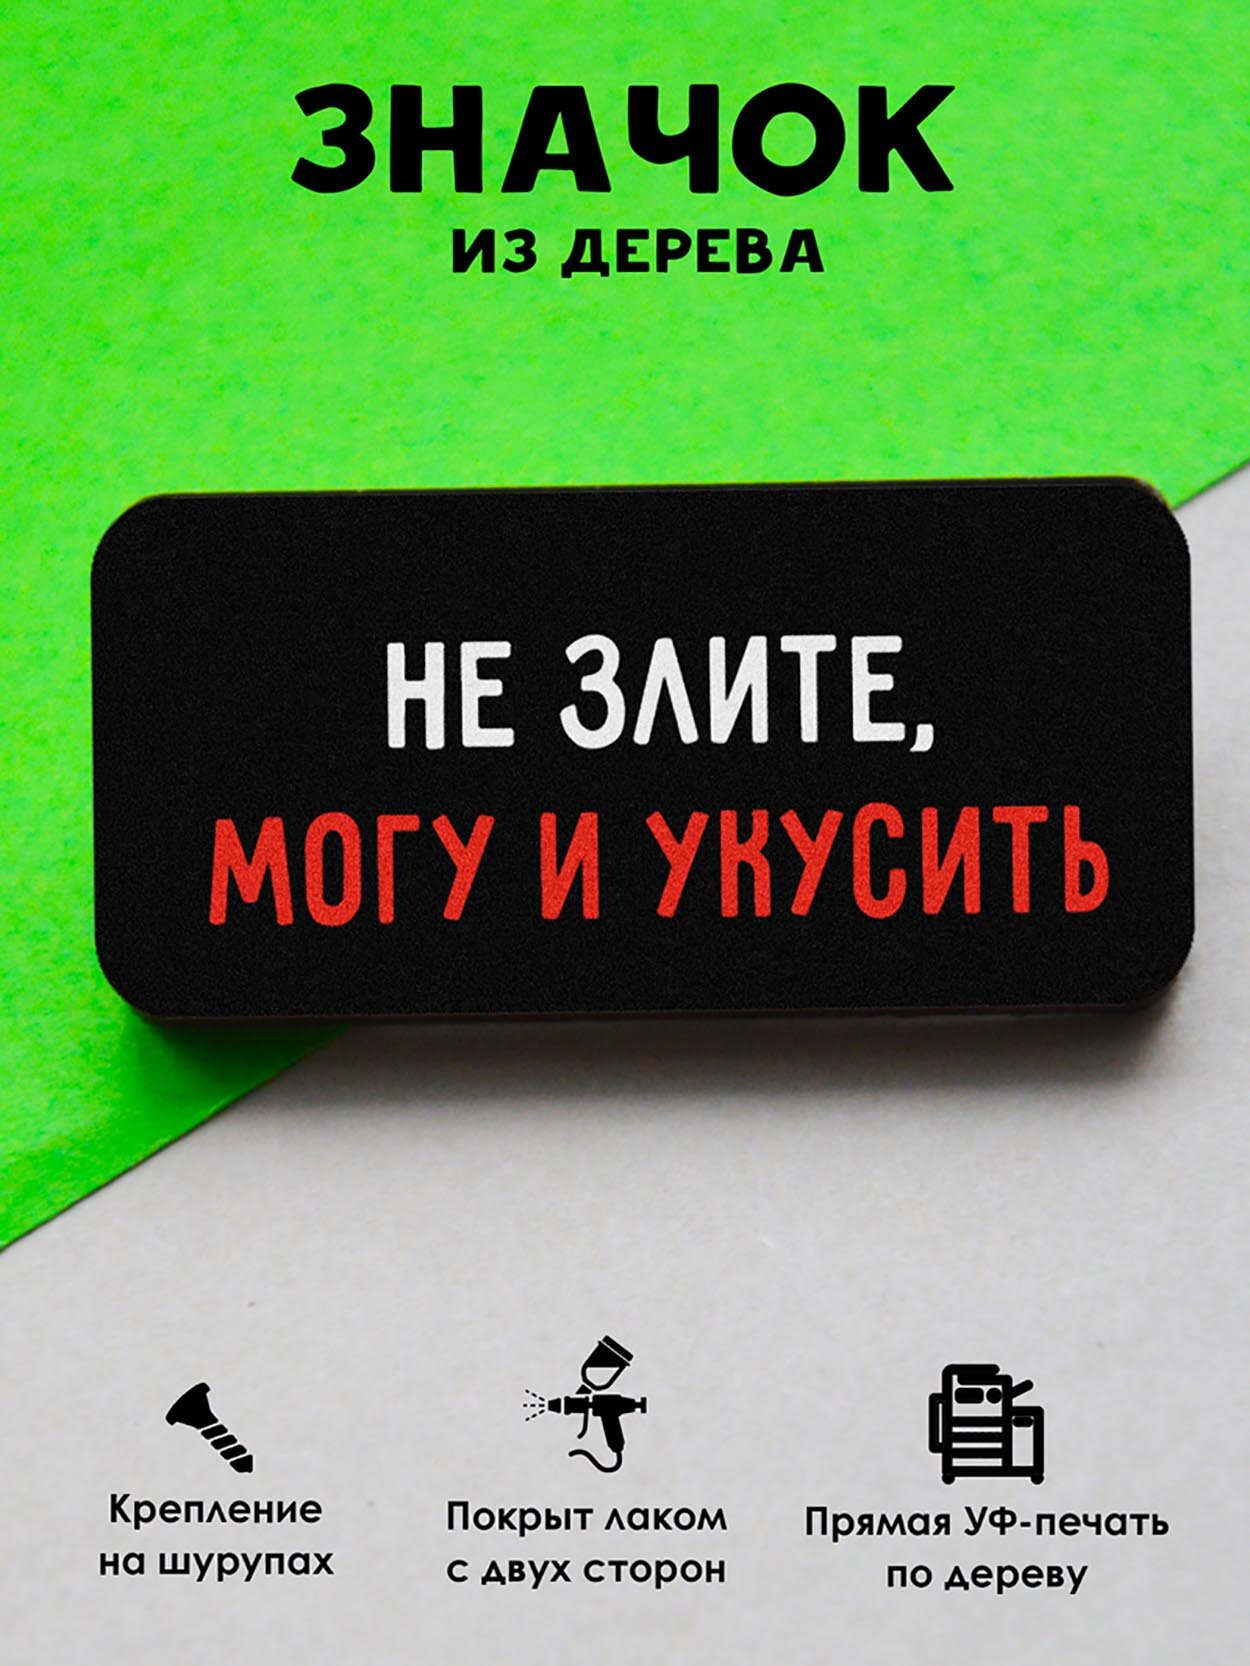 Значок деревянный MR. ZNACHKOFF "Не злите"